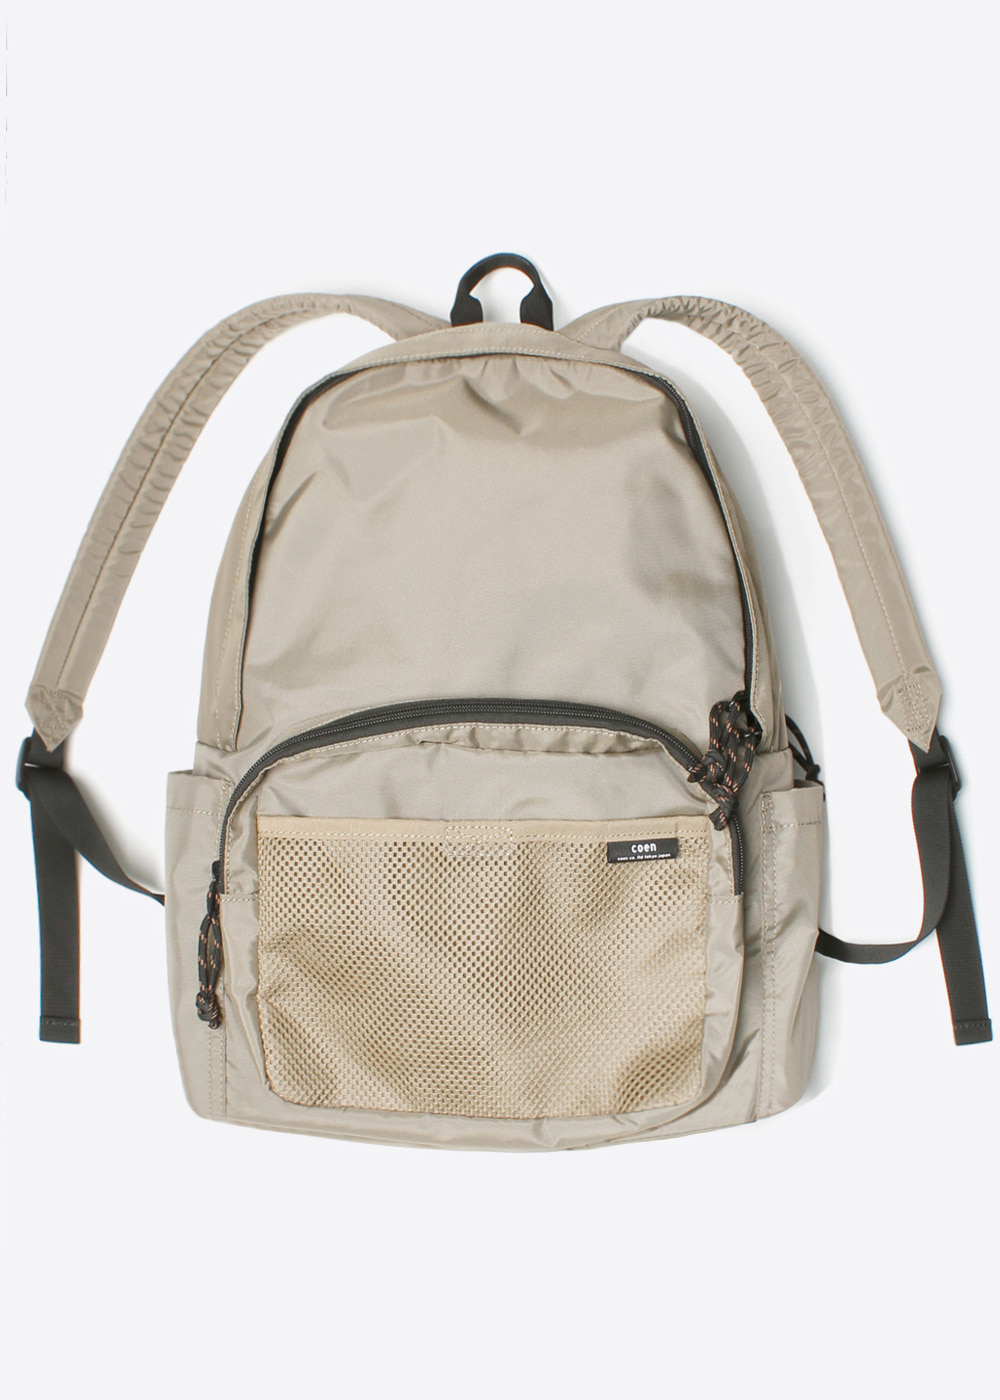 COEN BY UNITED ARROWSnylon mesh backpack